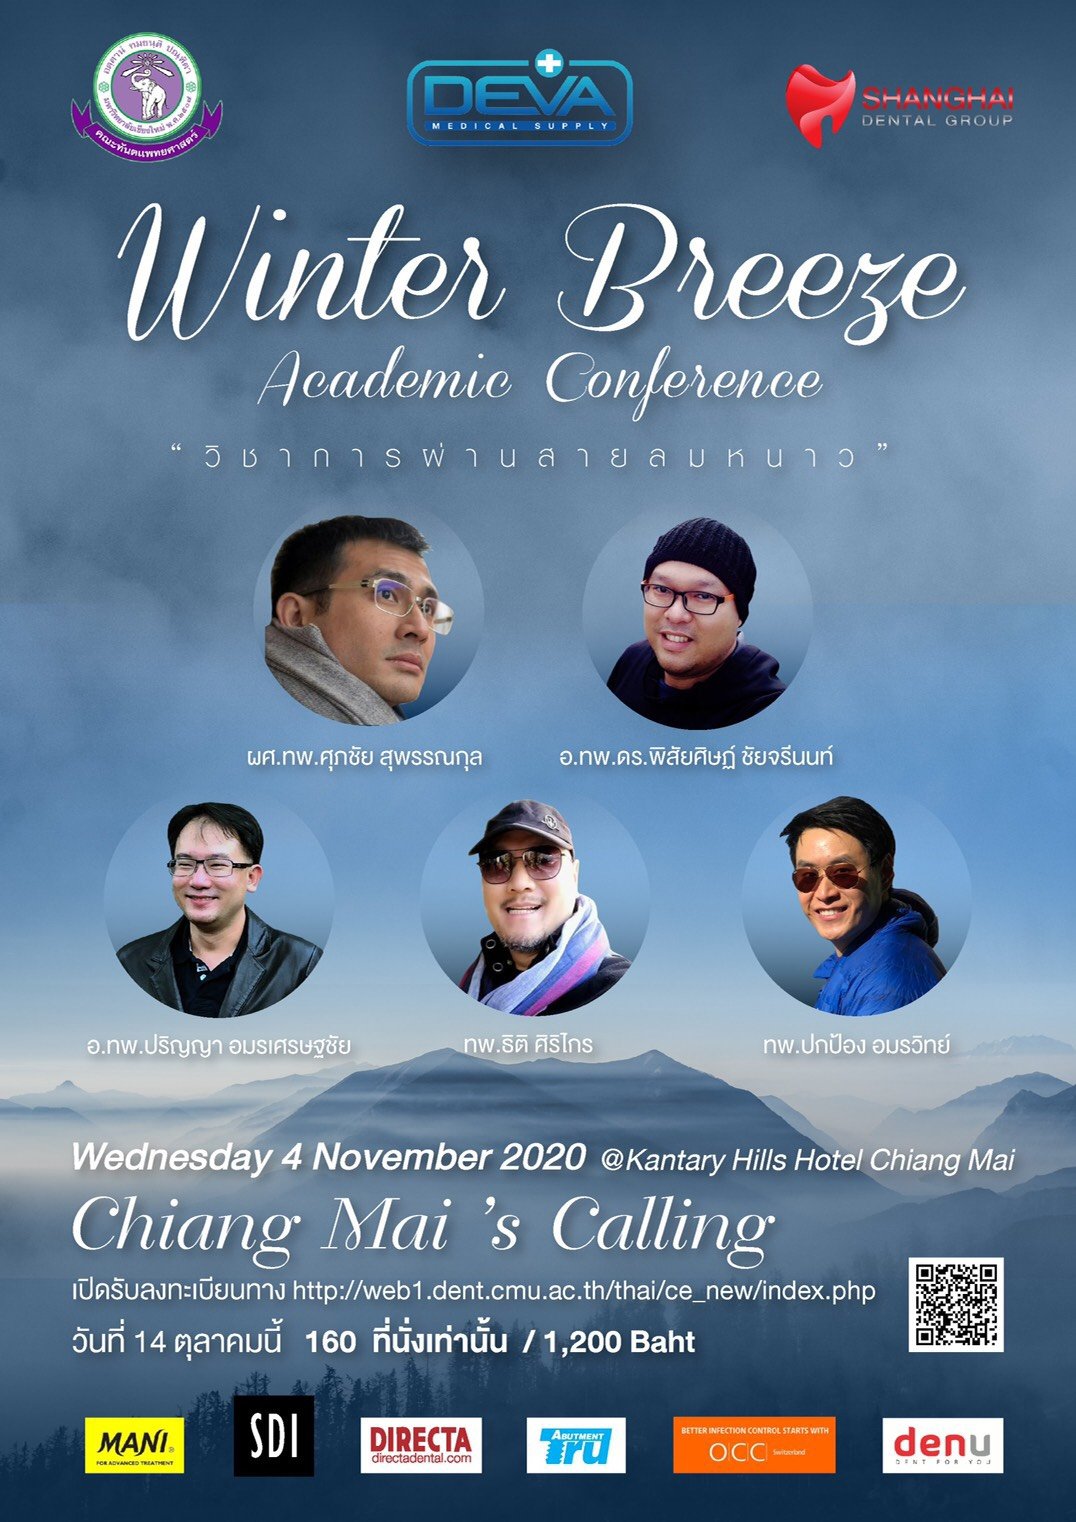 DEVA Winter Breeze Academic Conference